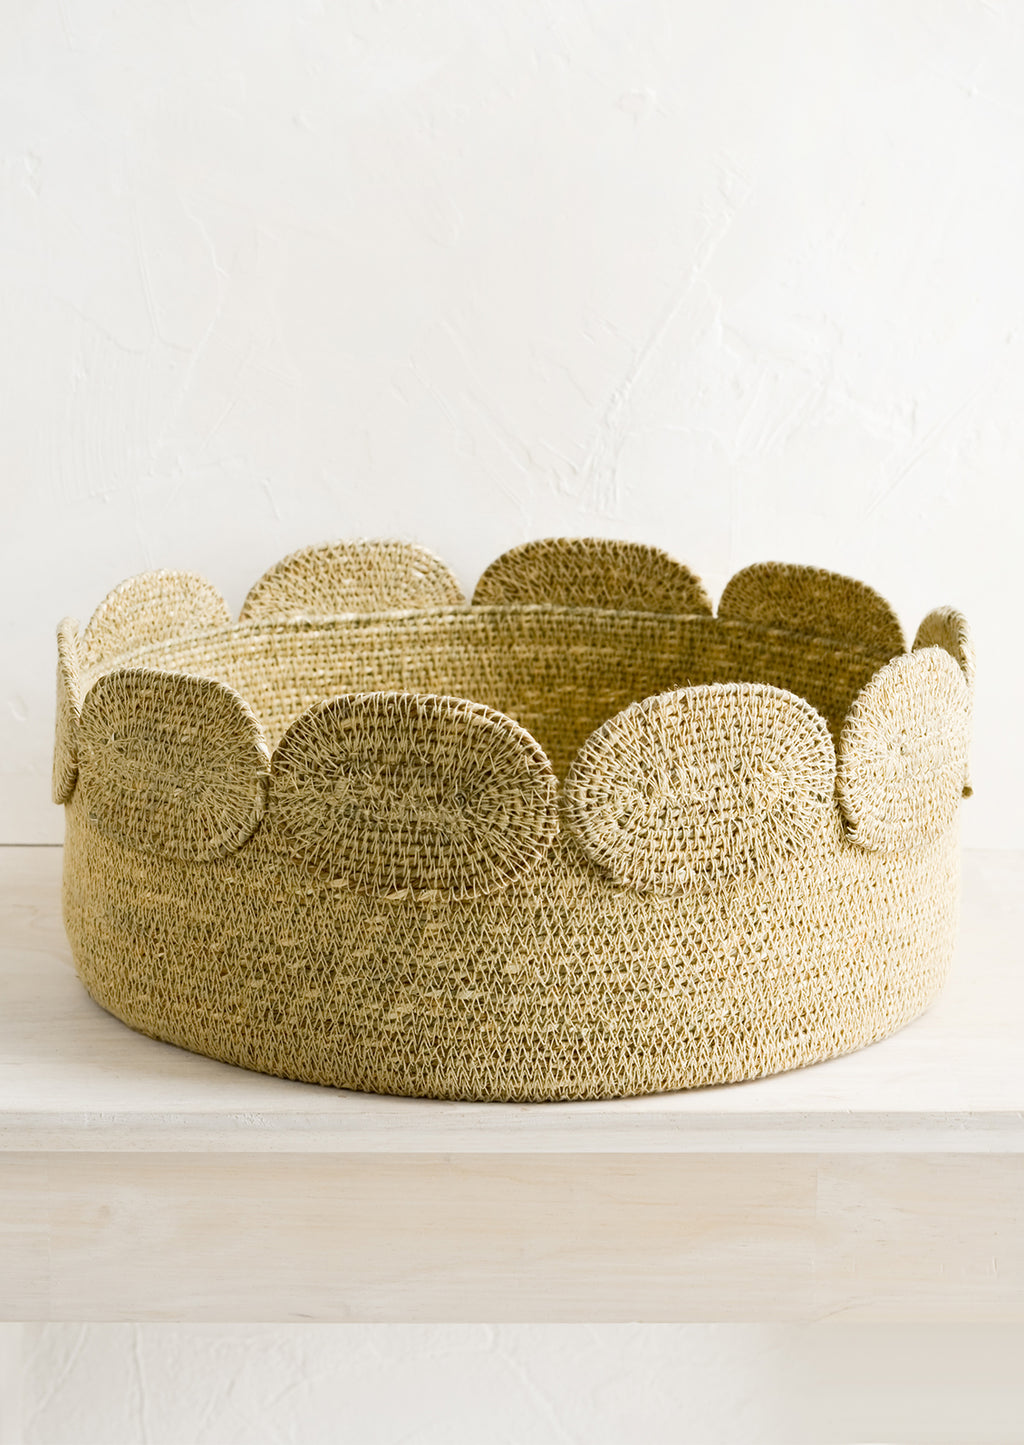 Wide: A shallow circular seagrass storage basket.